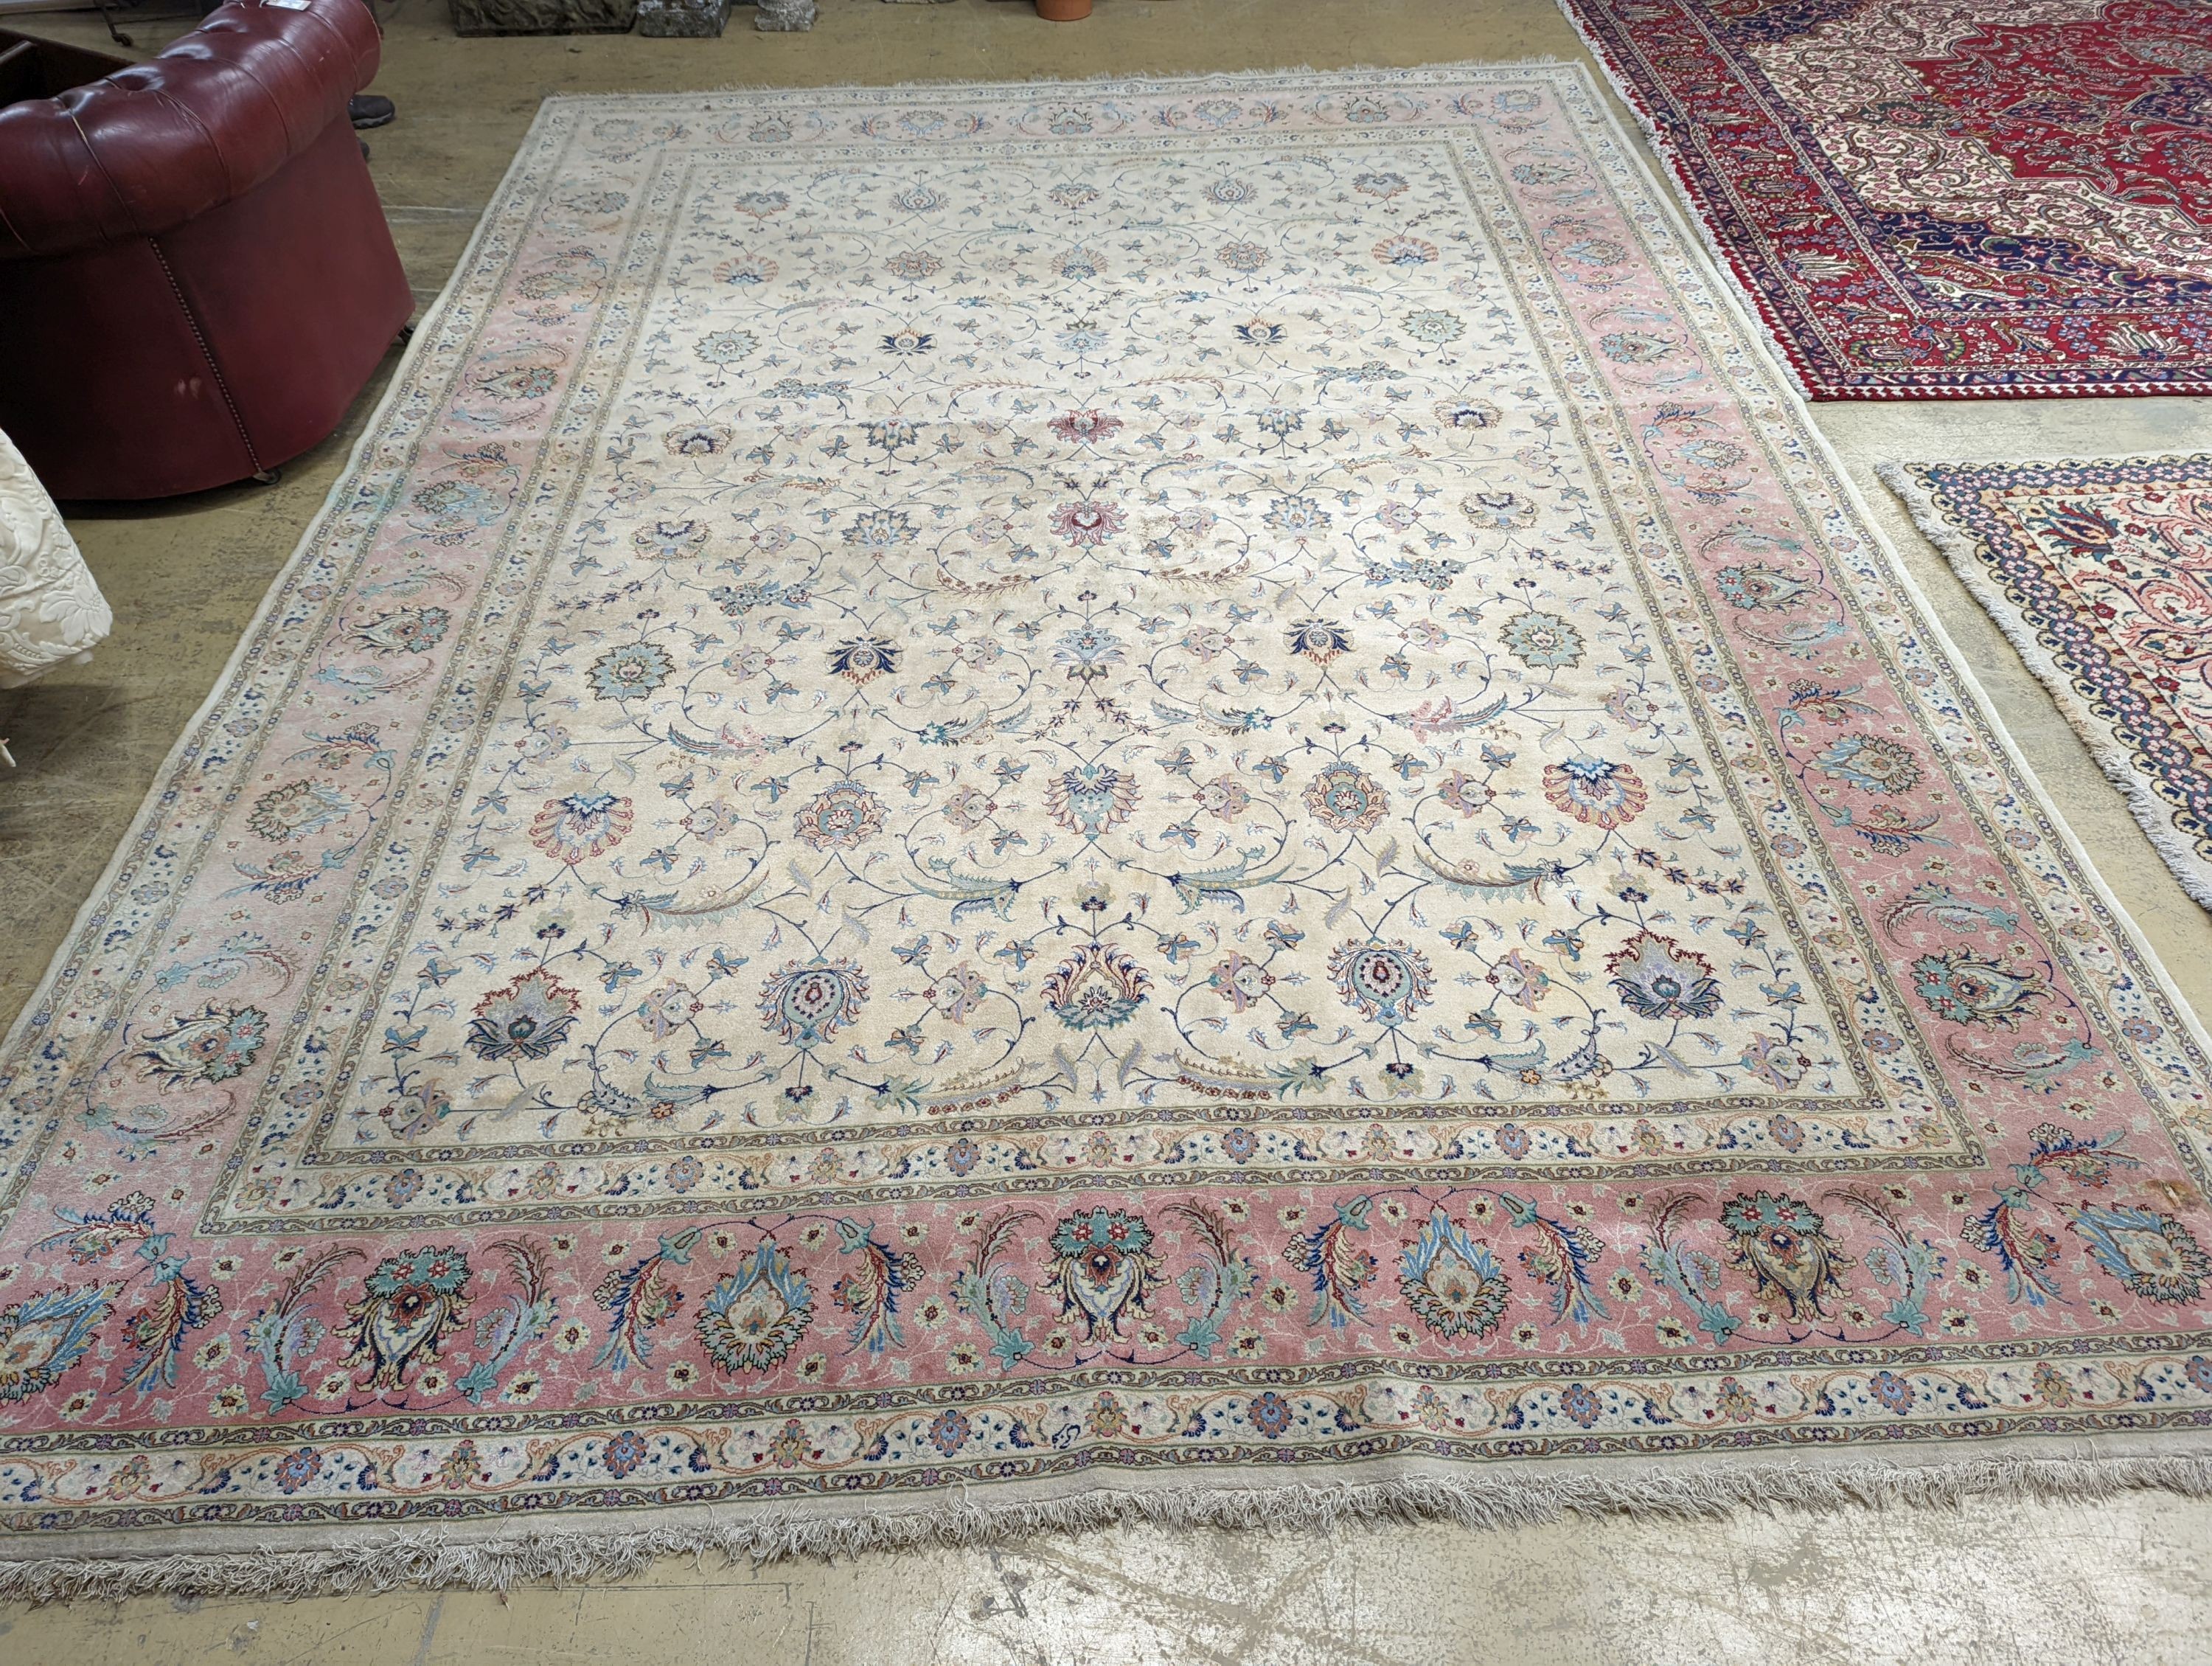 A Persian Tabriz ivory ground carpet, 410 x 300